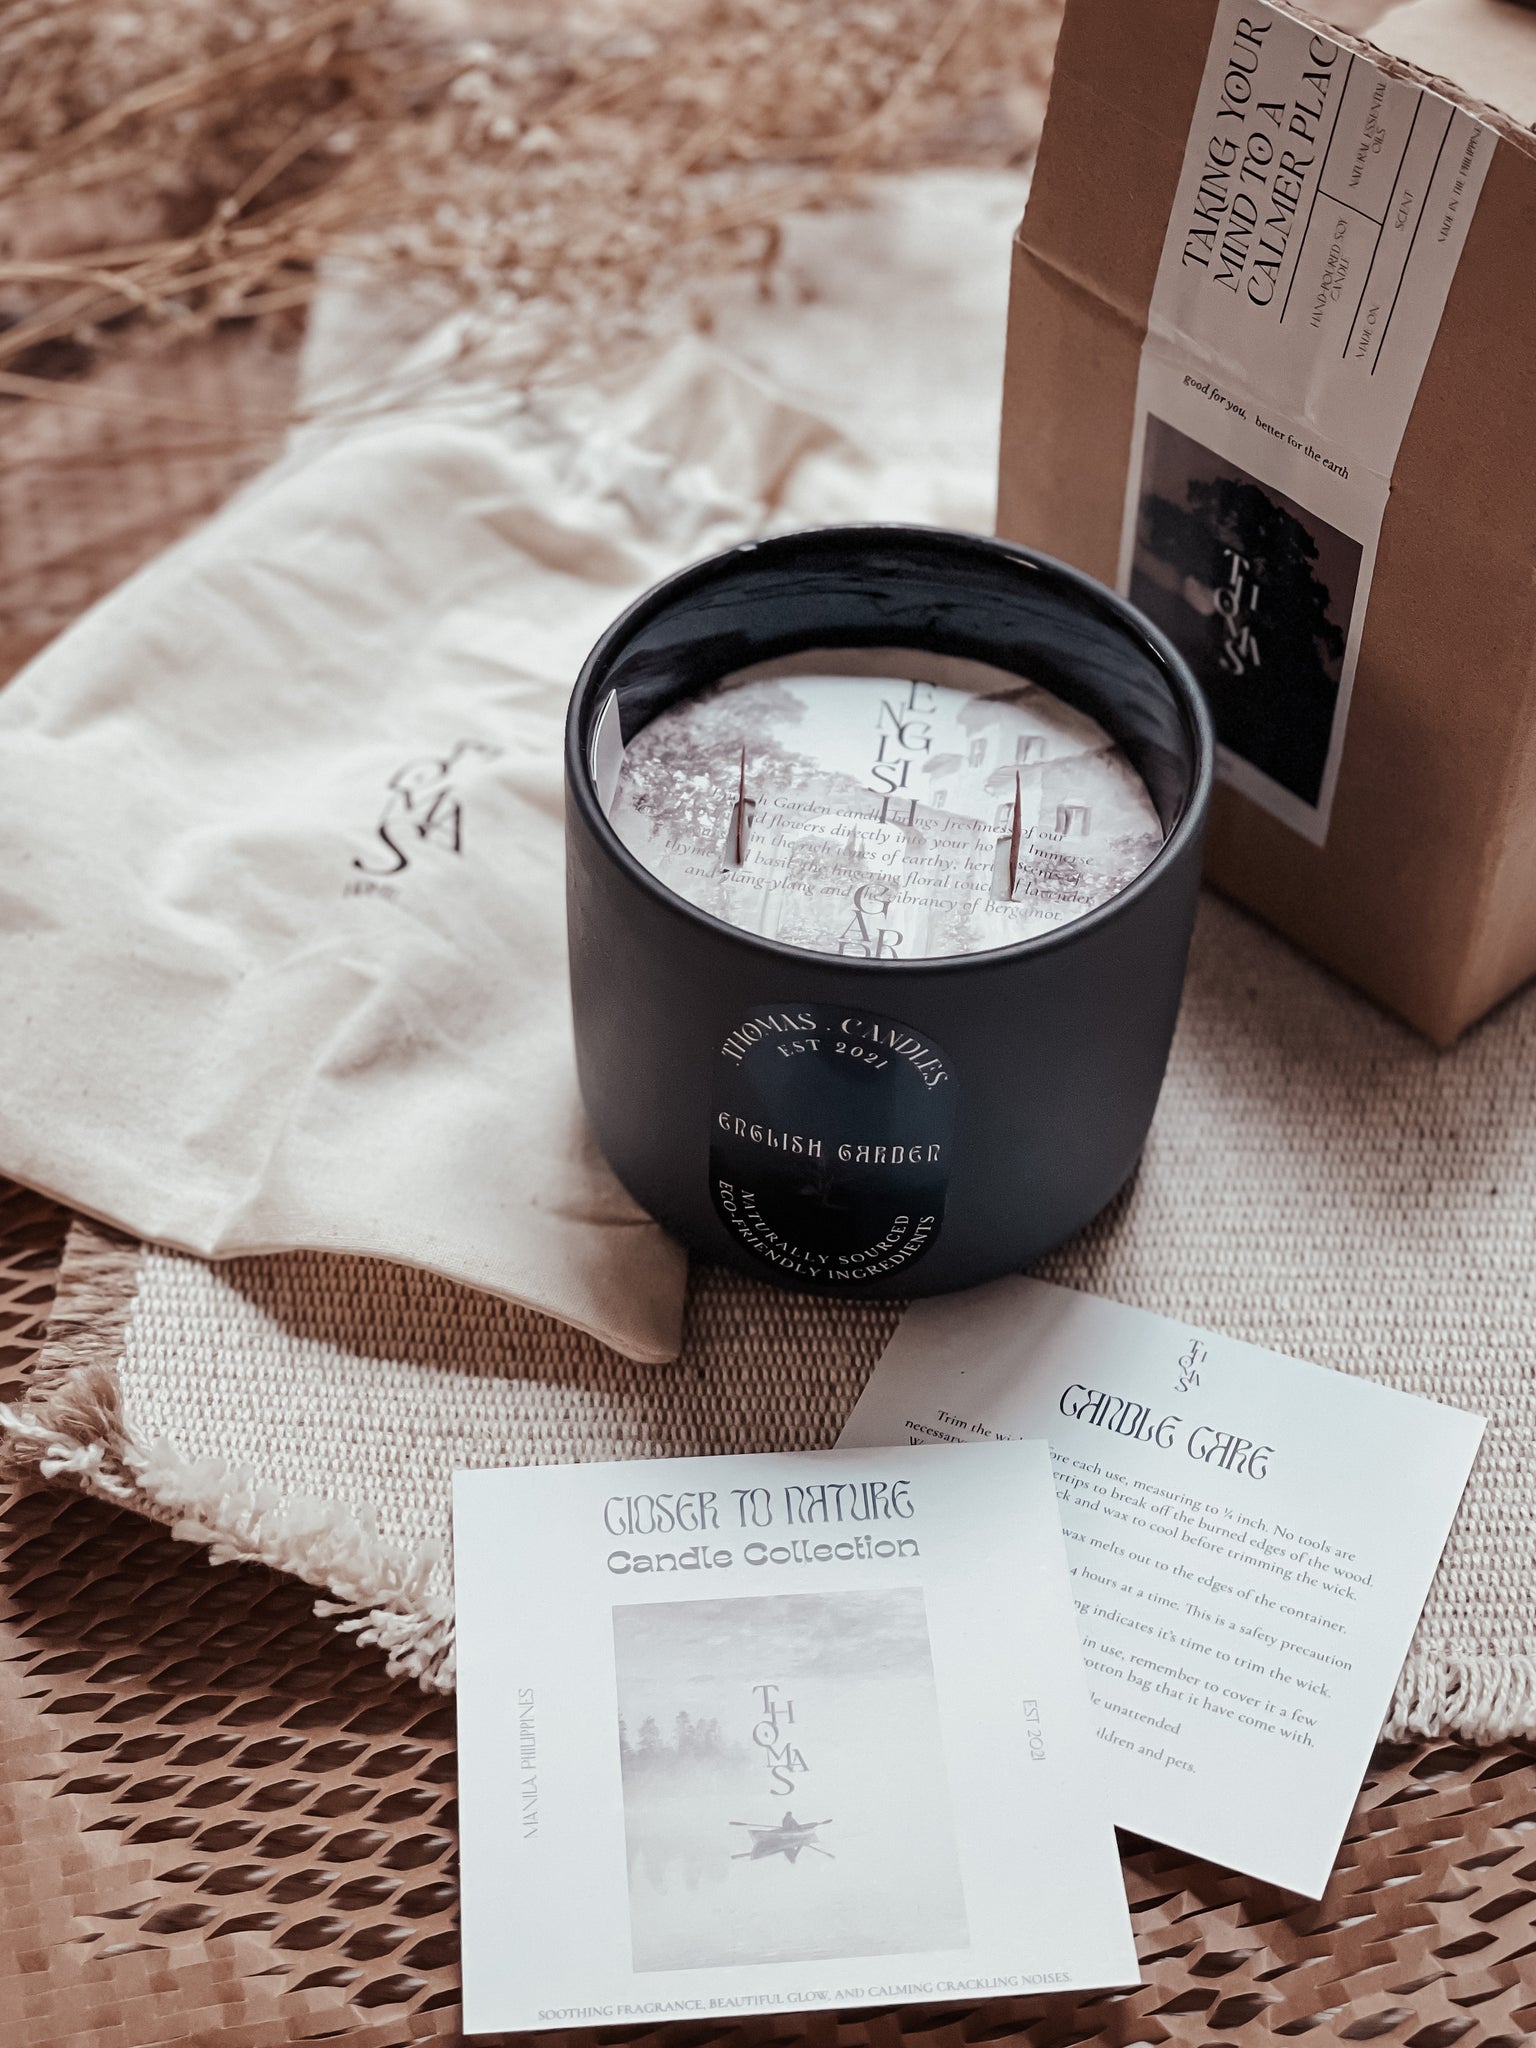 Thomas All-Natural Soy Candle | Summer Rain in Blush Ceramic Jar